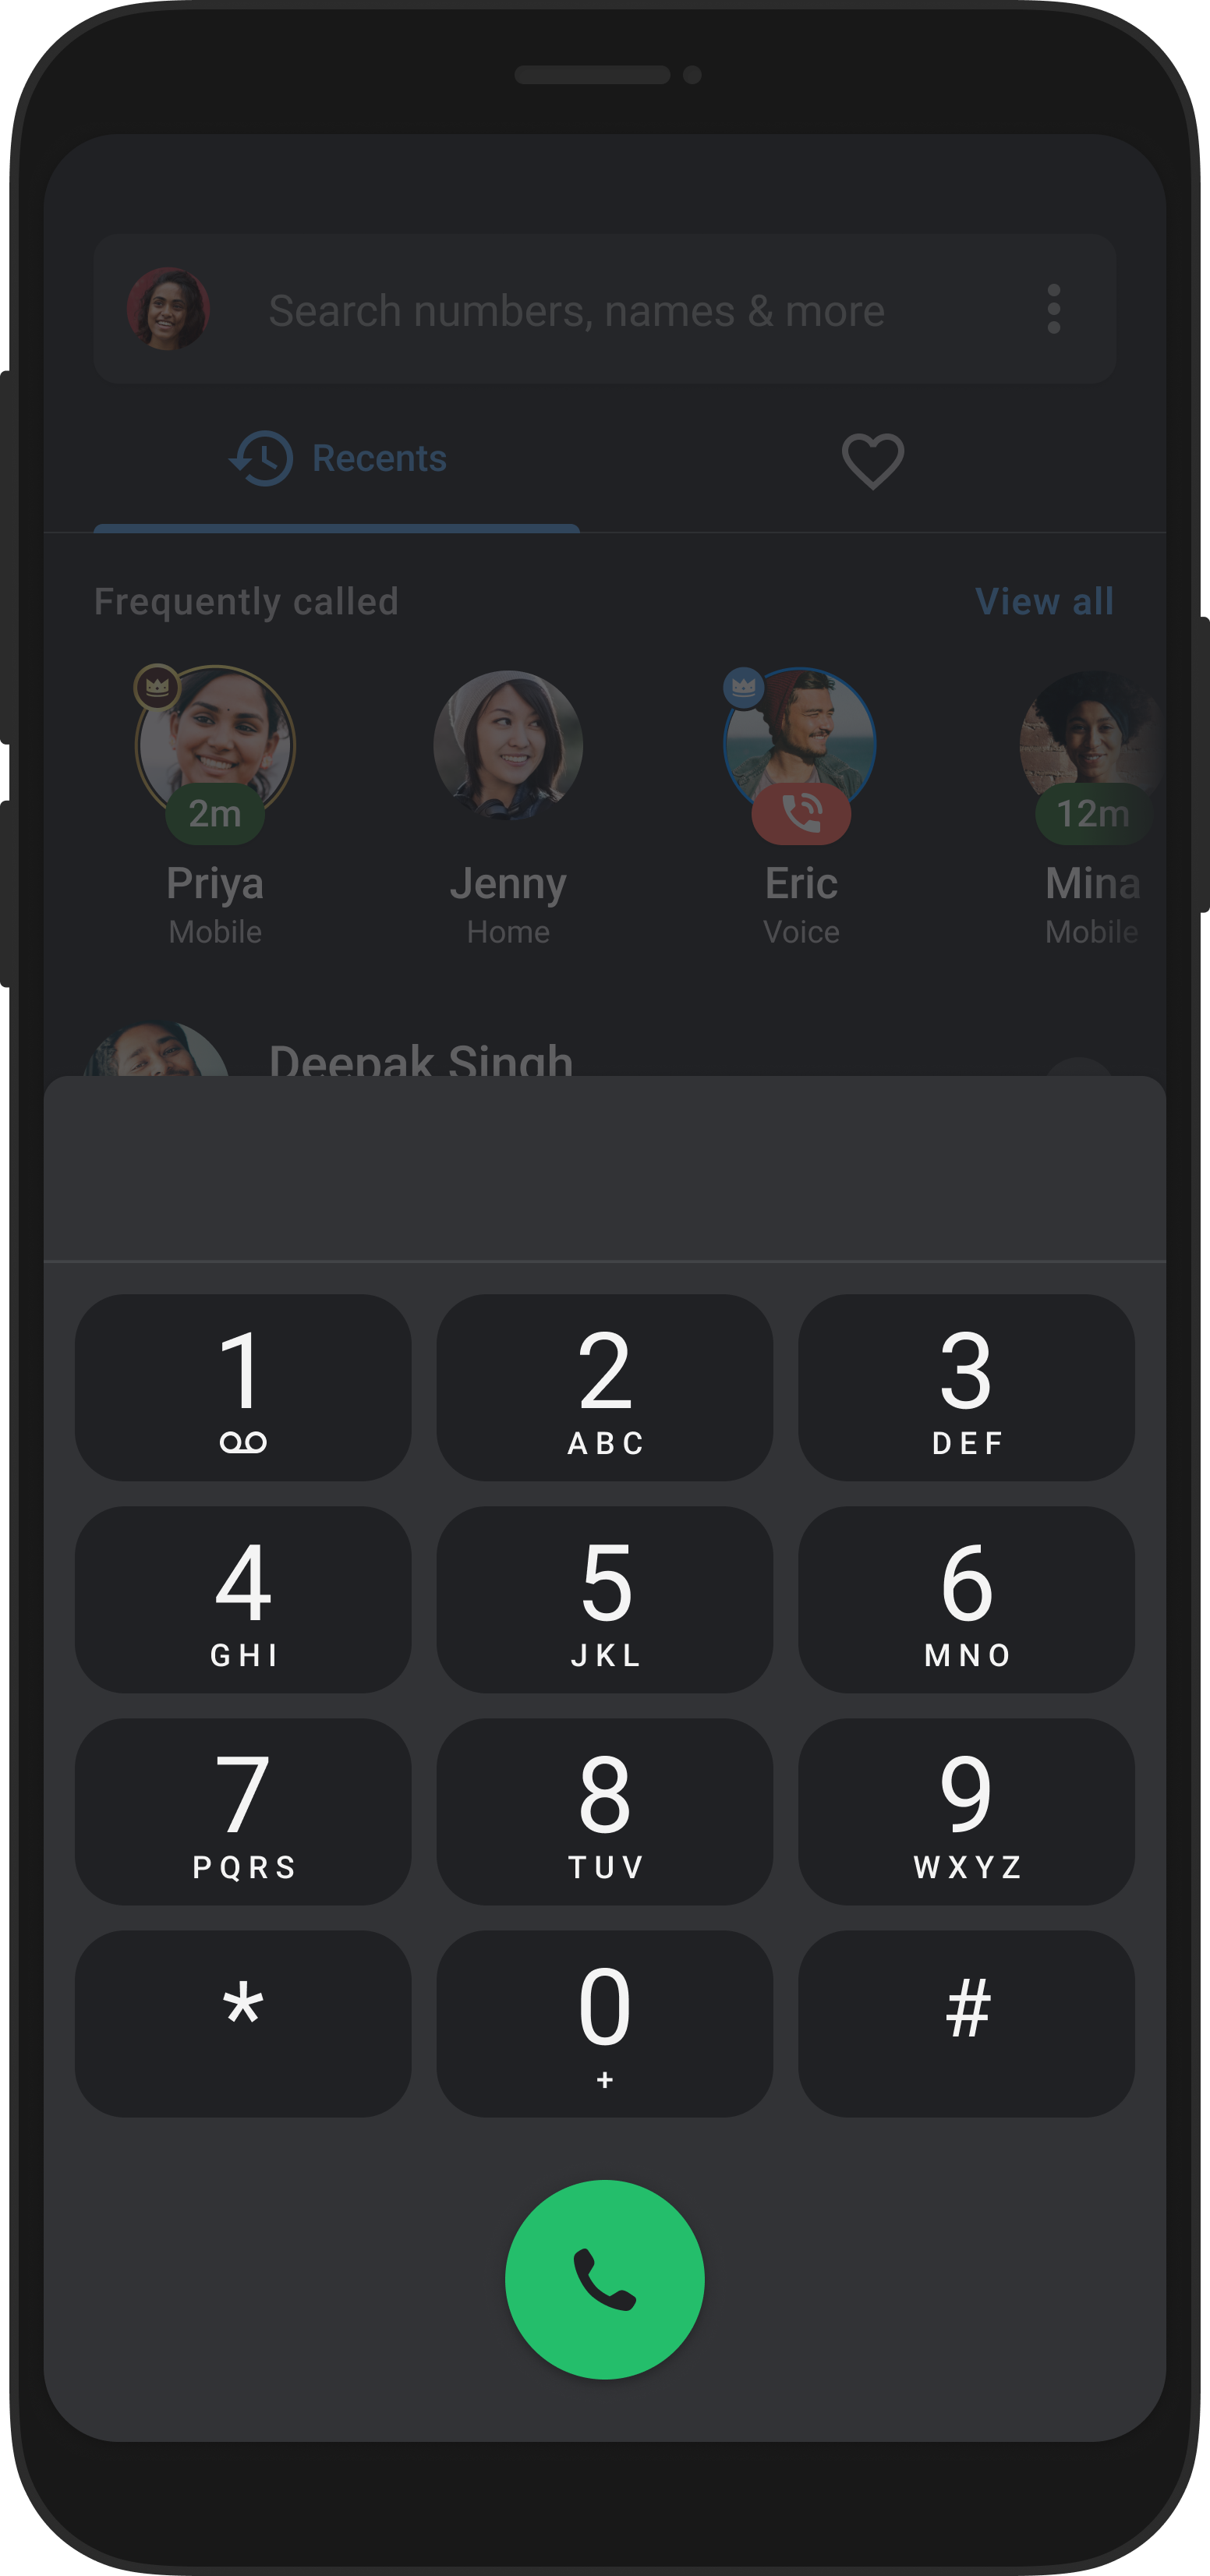 Dark phone screen showing how the Truecaller works